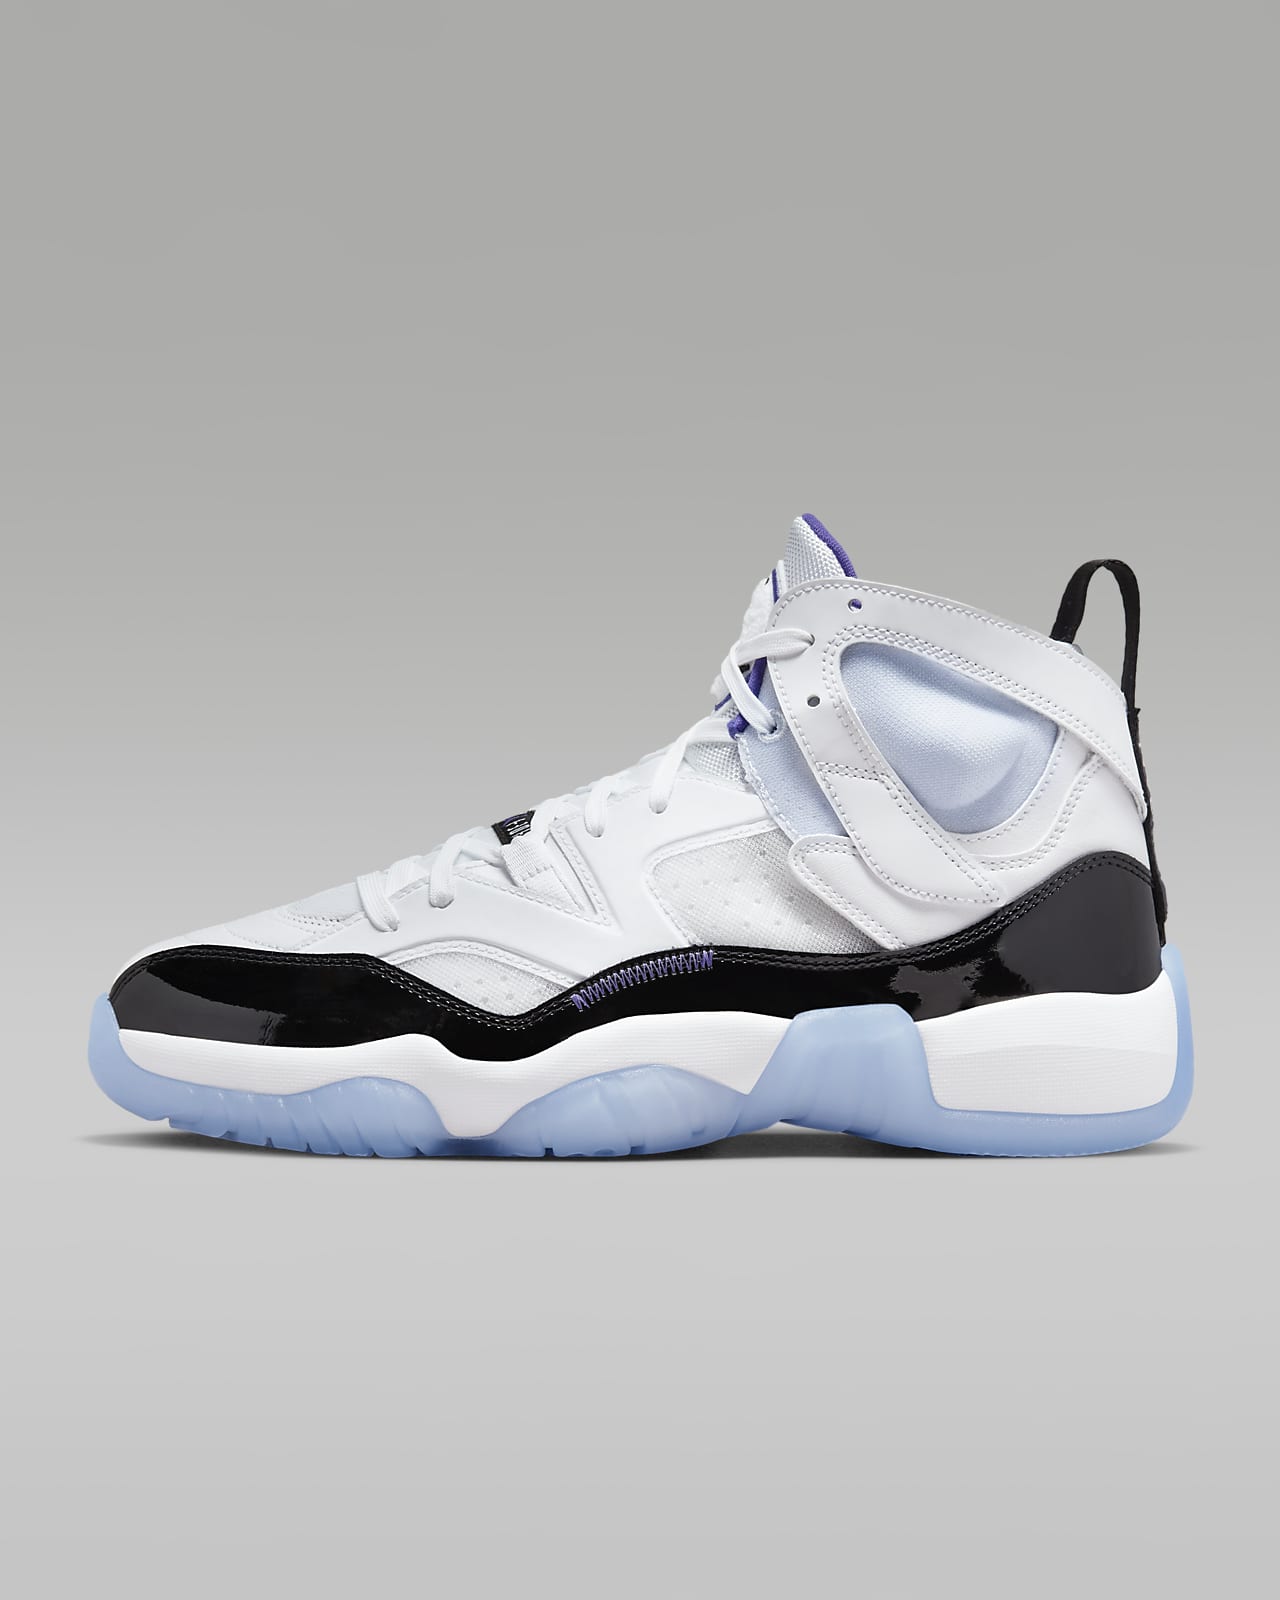 Jordan Mens Retro 4 Basketball Shoes, Black/Light Graphite, Size 9.5